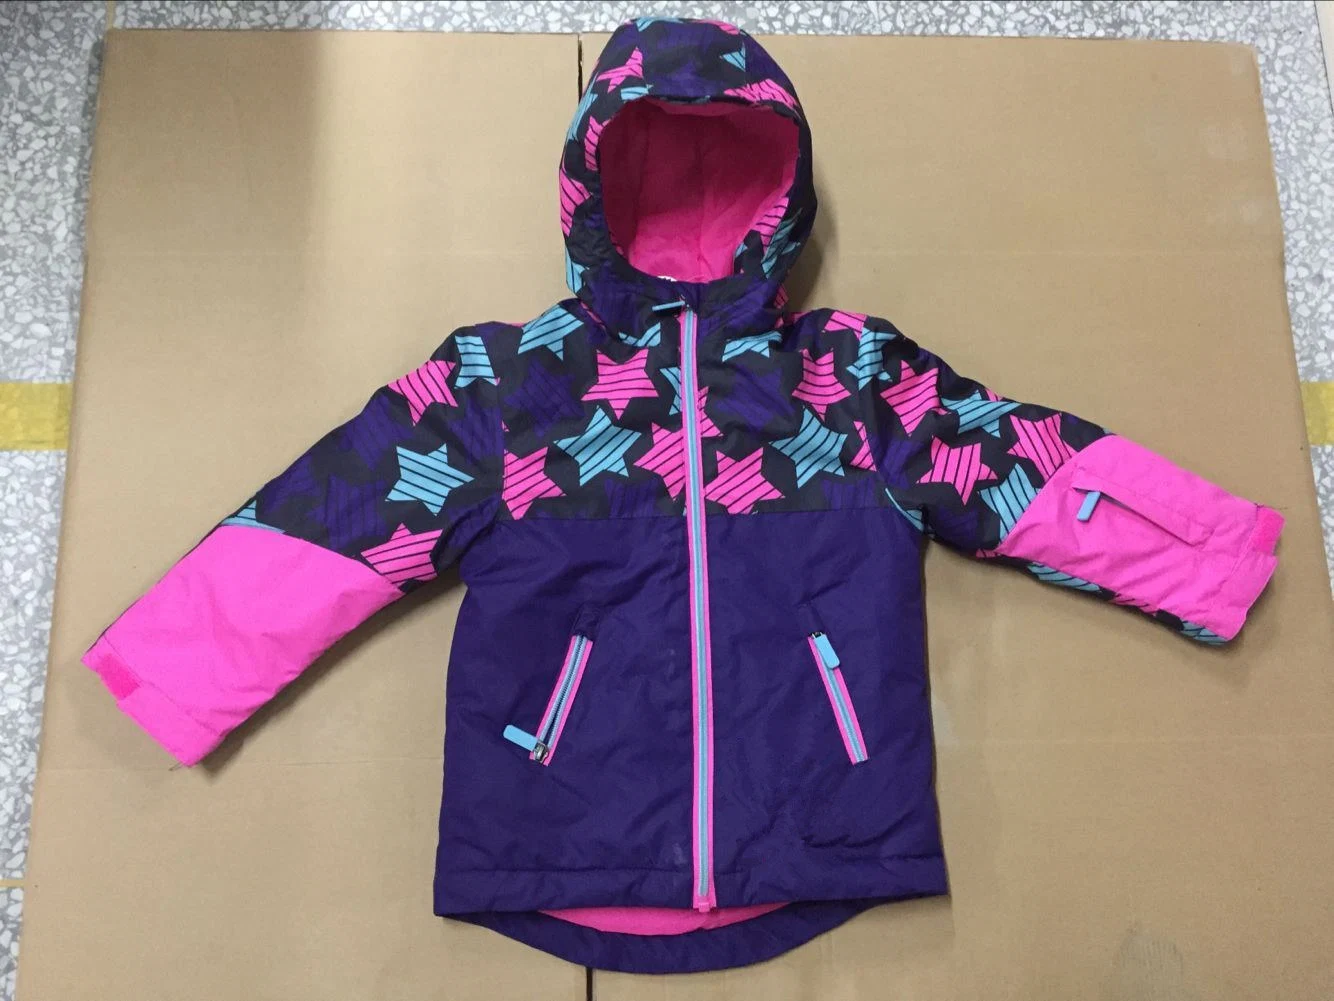 Customized Winter Coat Reflective Tape Clothing Ski Wear for Children